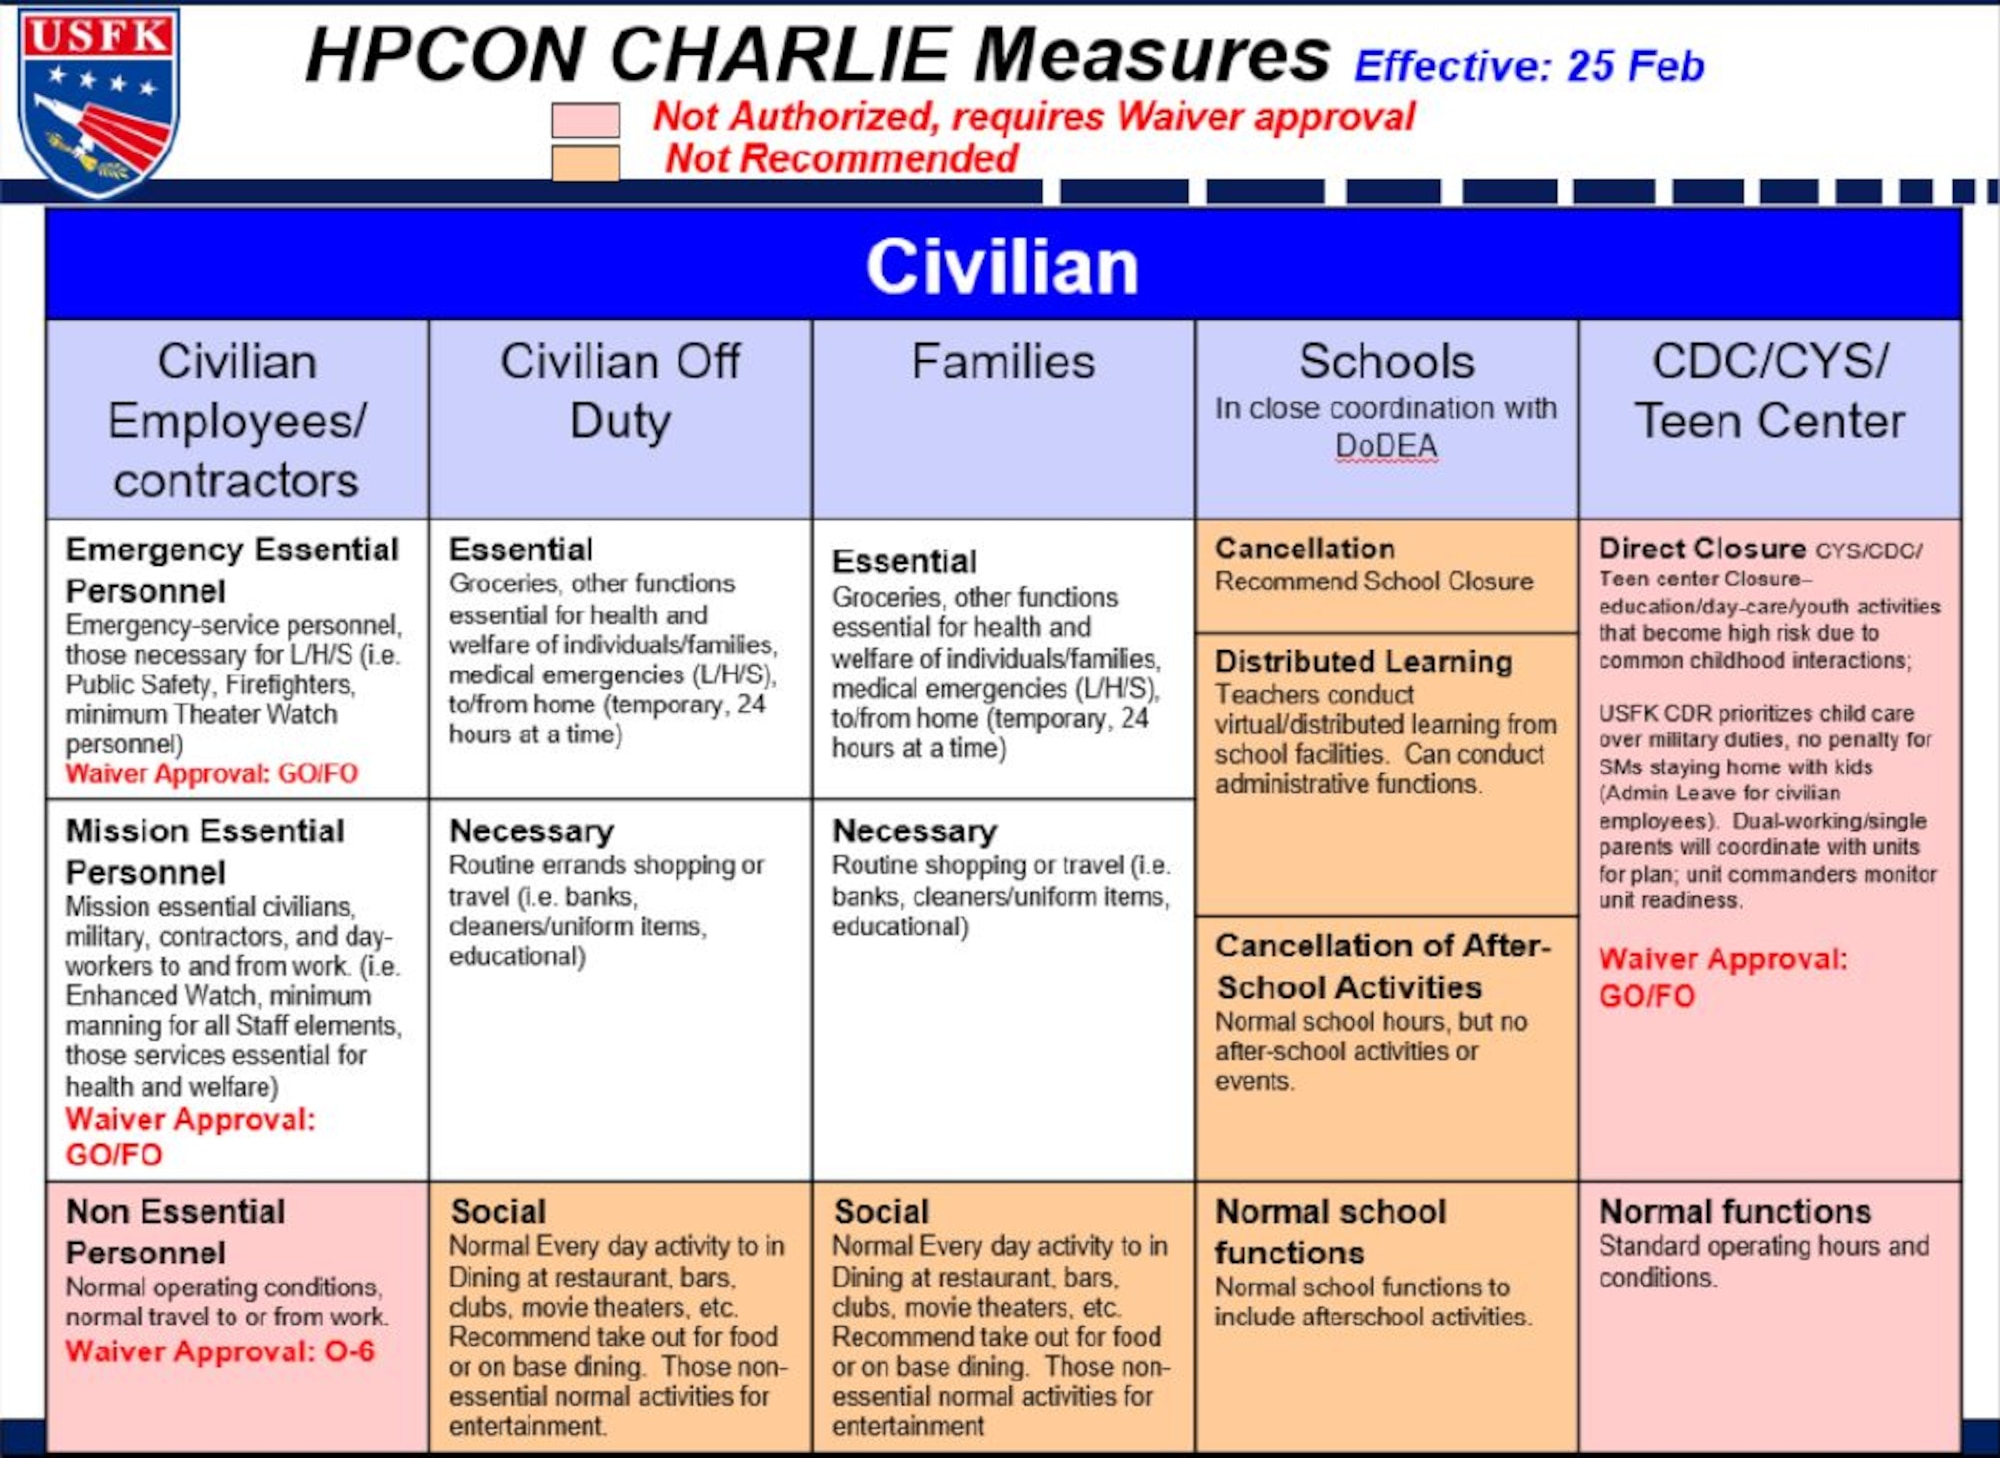 HPCON Charlie Measures